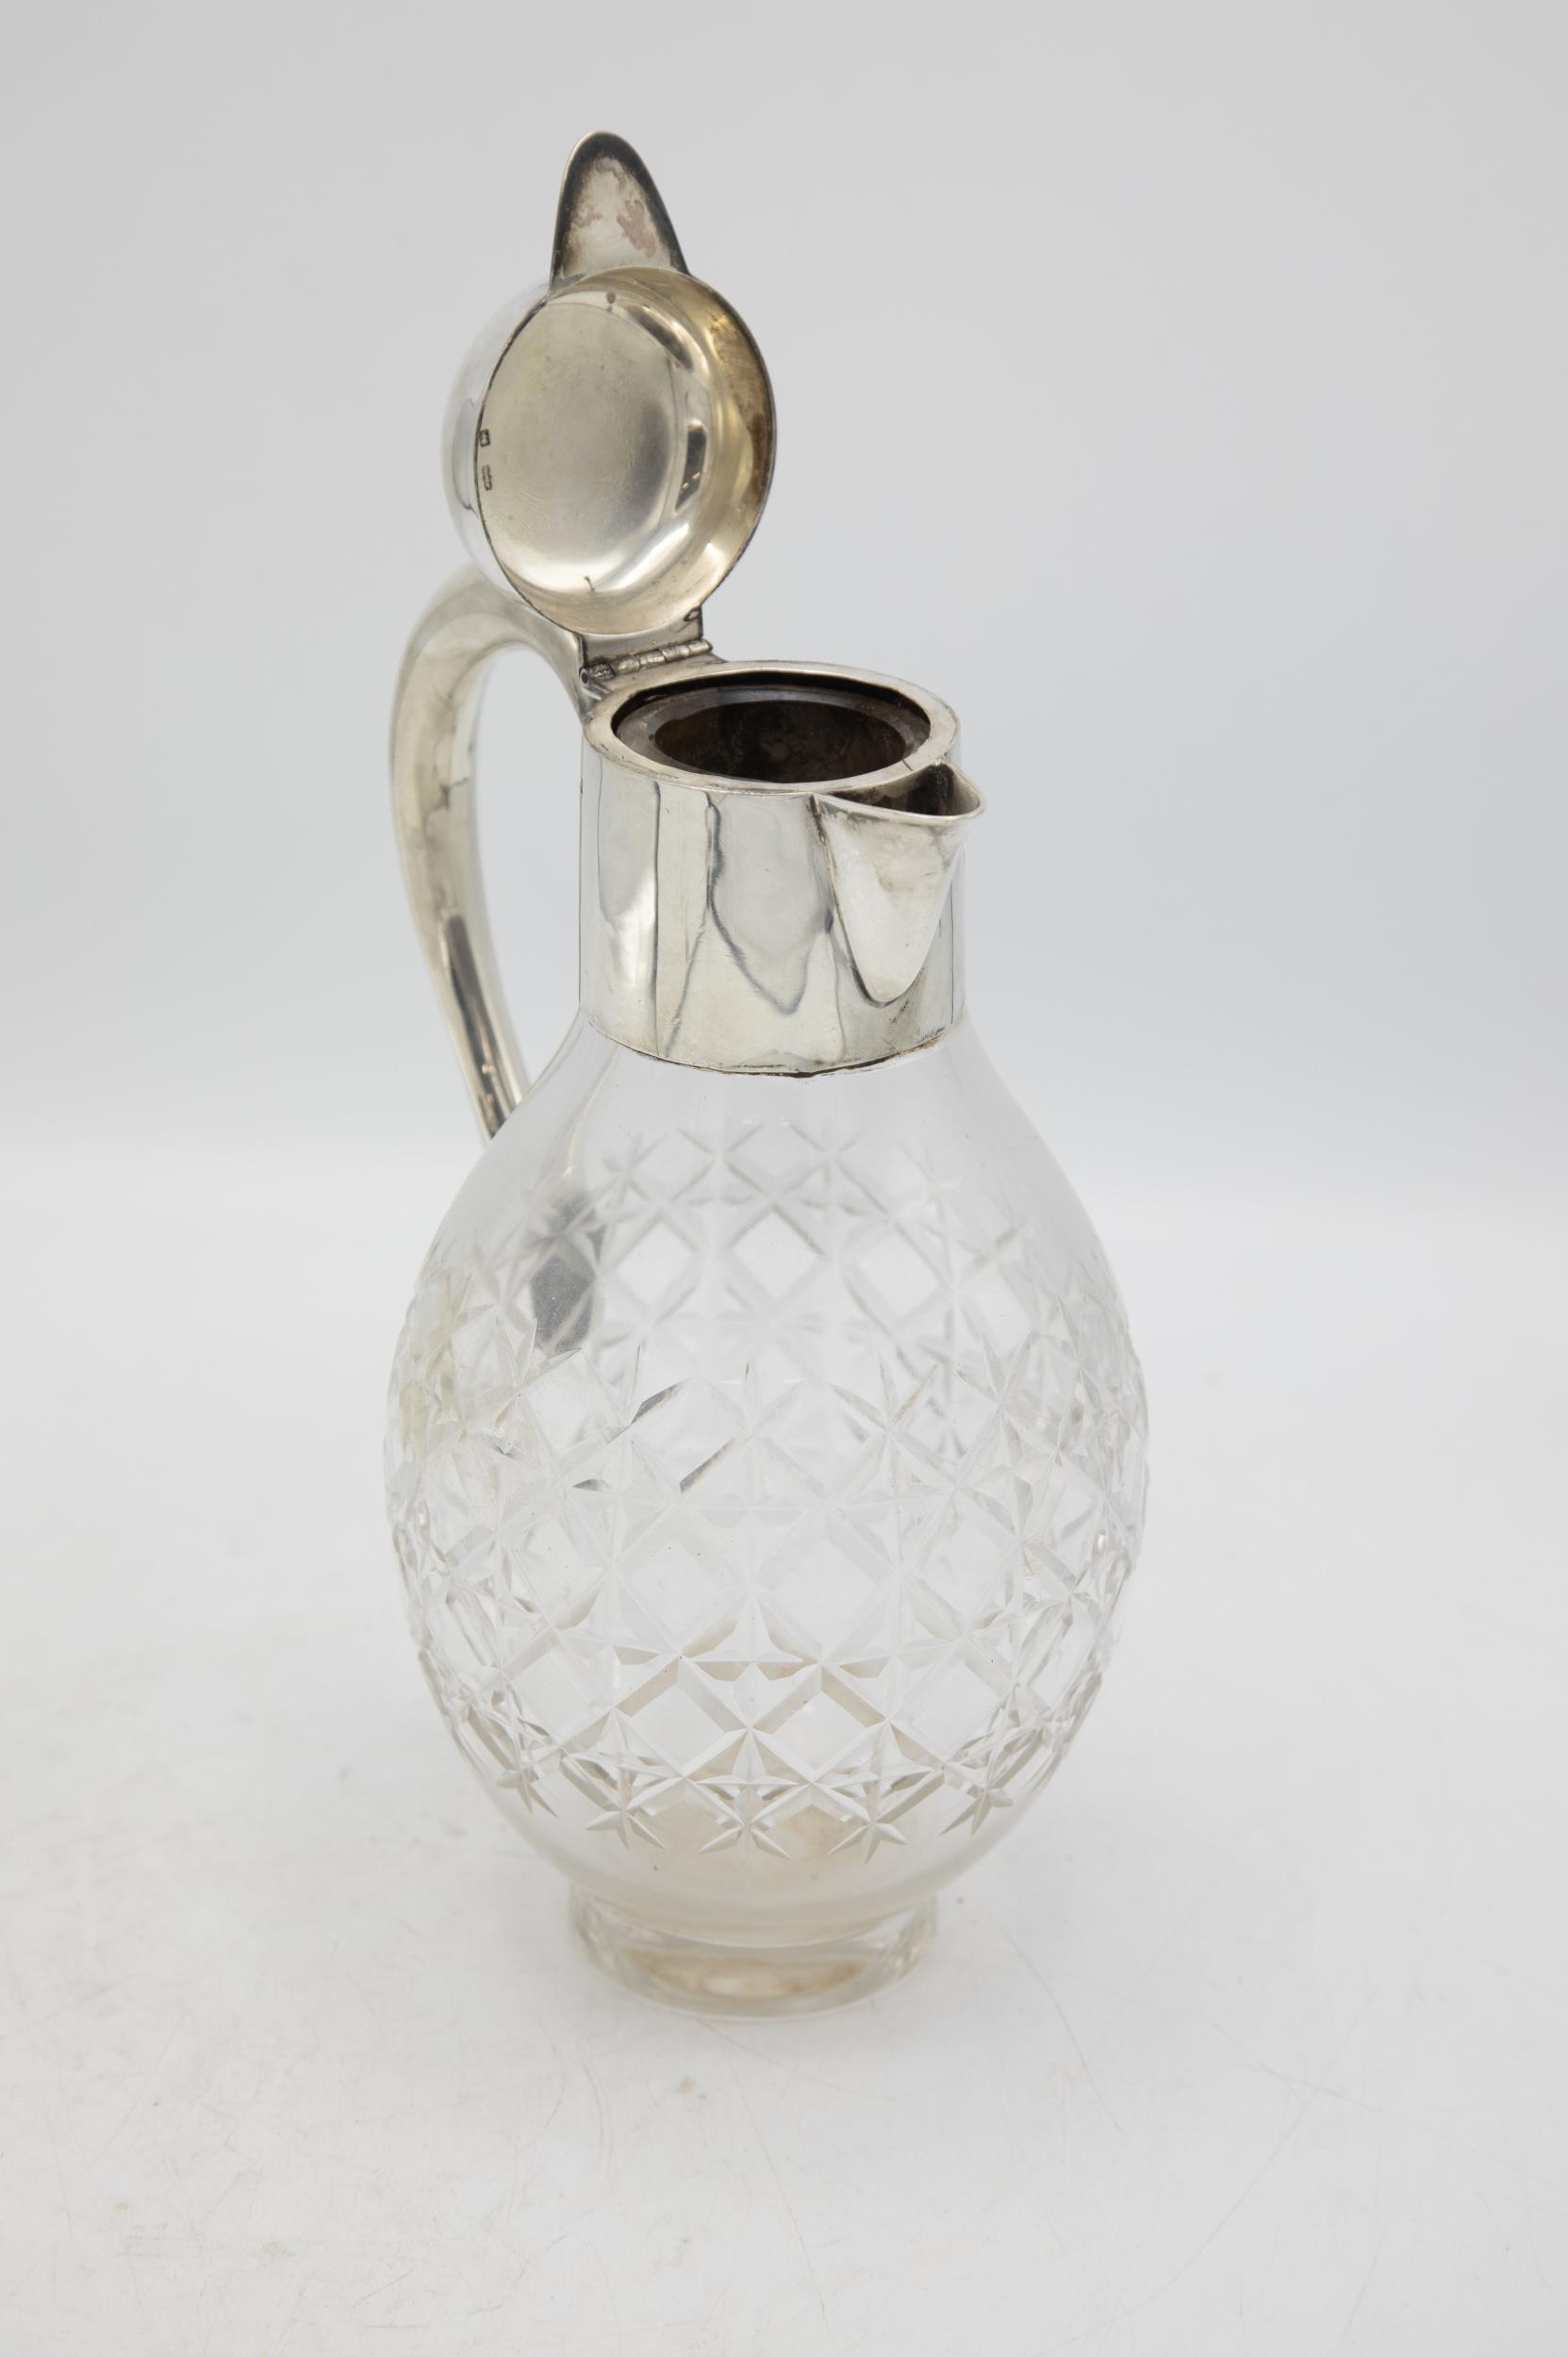 Edwardian silver and glass claret jug in the manner of Christopher Dresser, maker James Dixon & Sons - Image 3 of 3